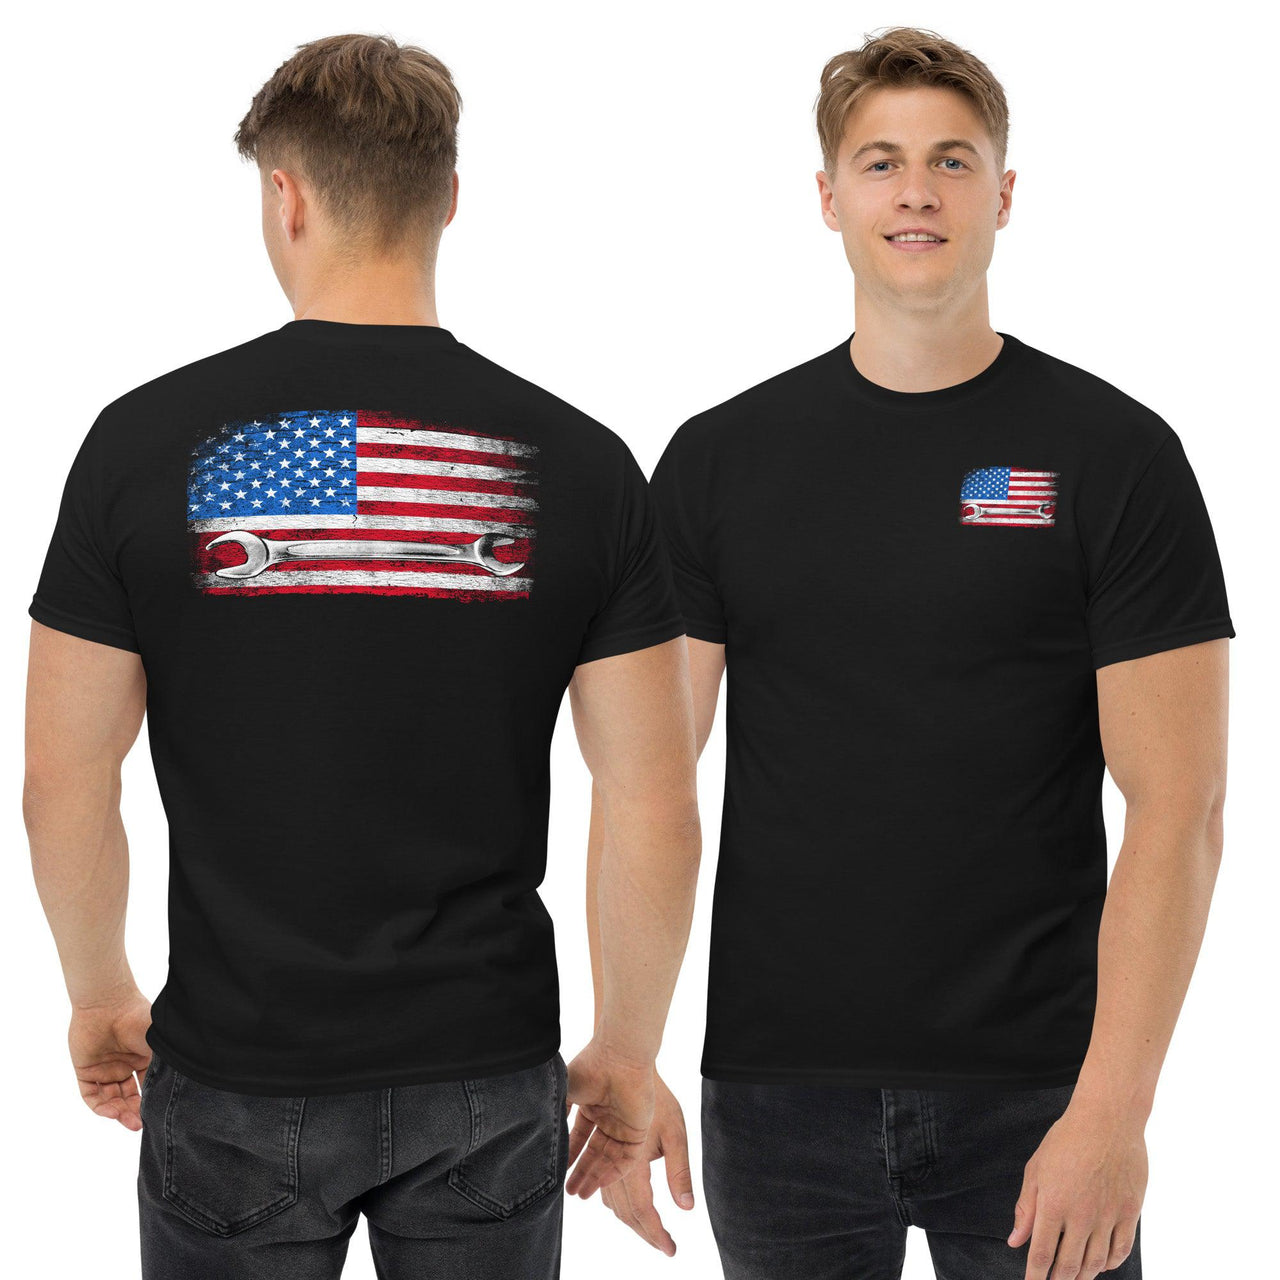 Mechanic T-Shirt American Flag Wrench Design modeled in black